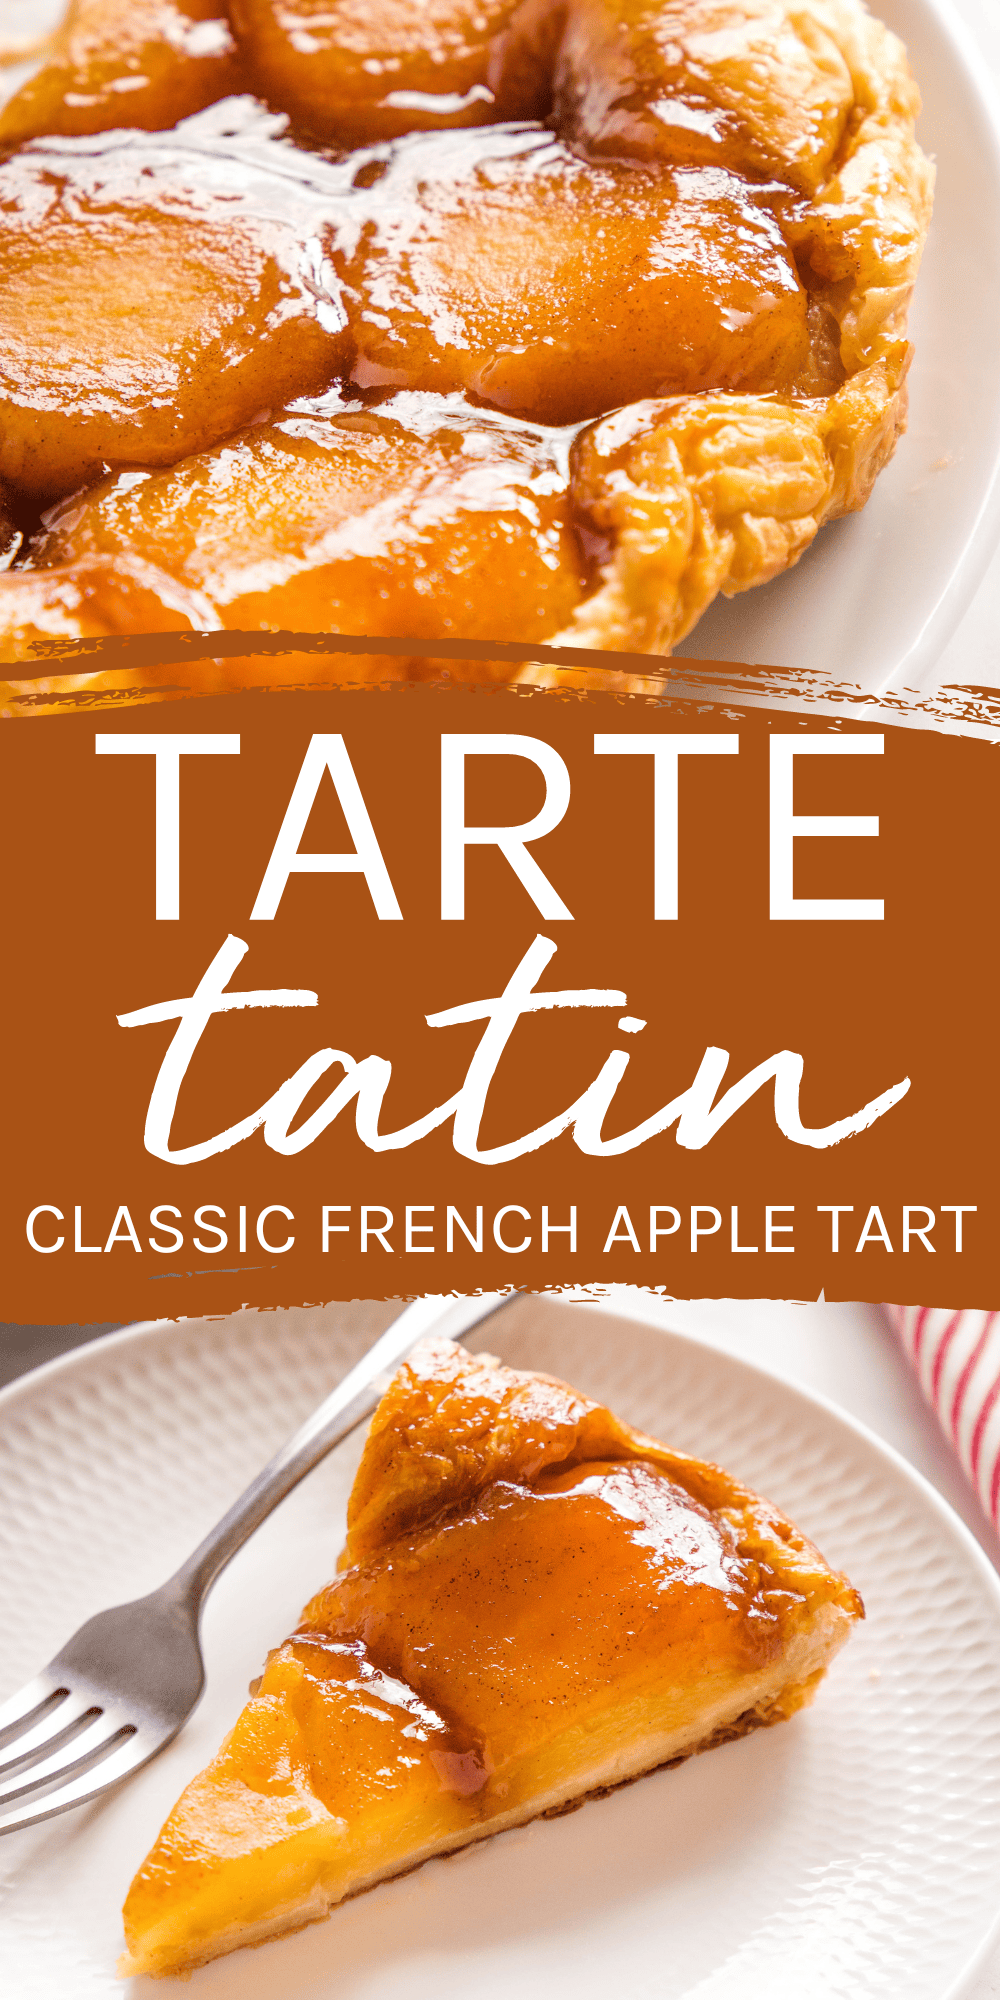 Tarte Tatin  The Caramelized French Apple Tart